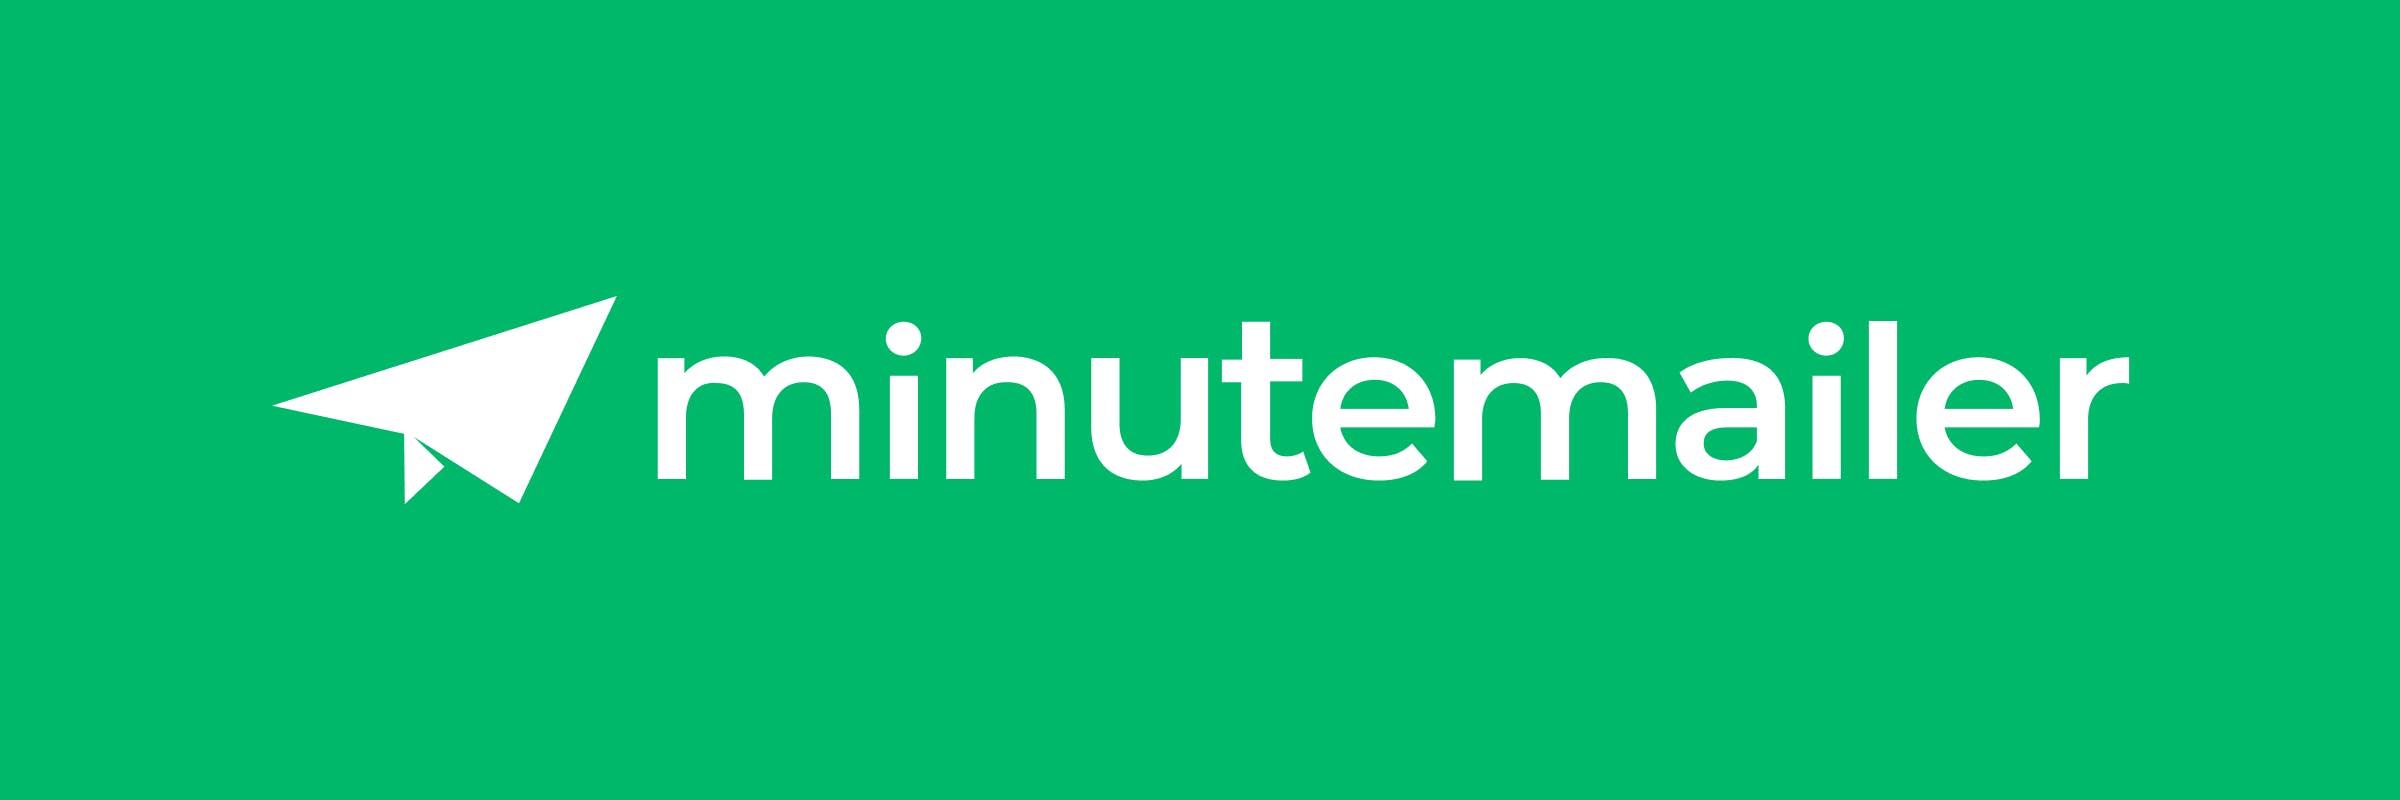 Minutemailer logotyp